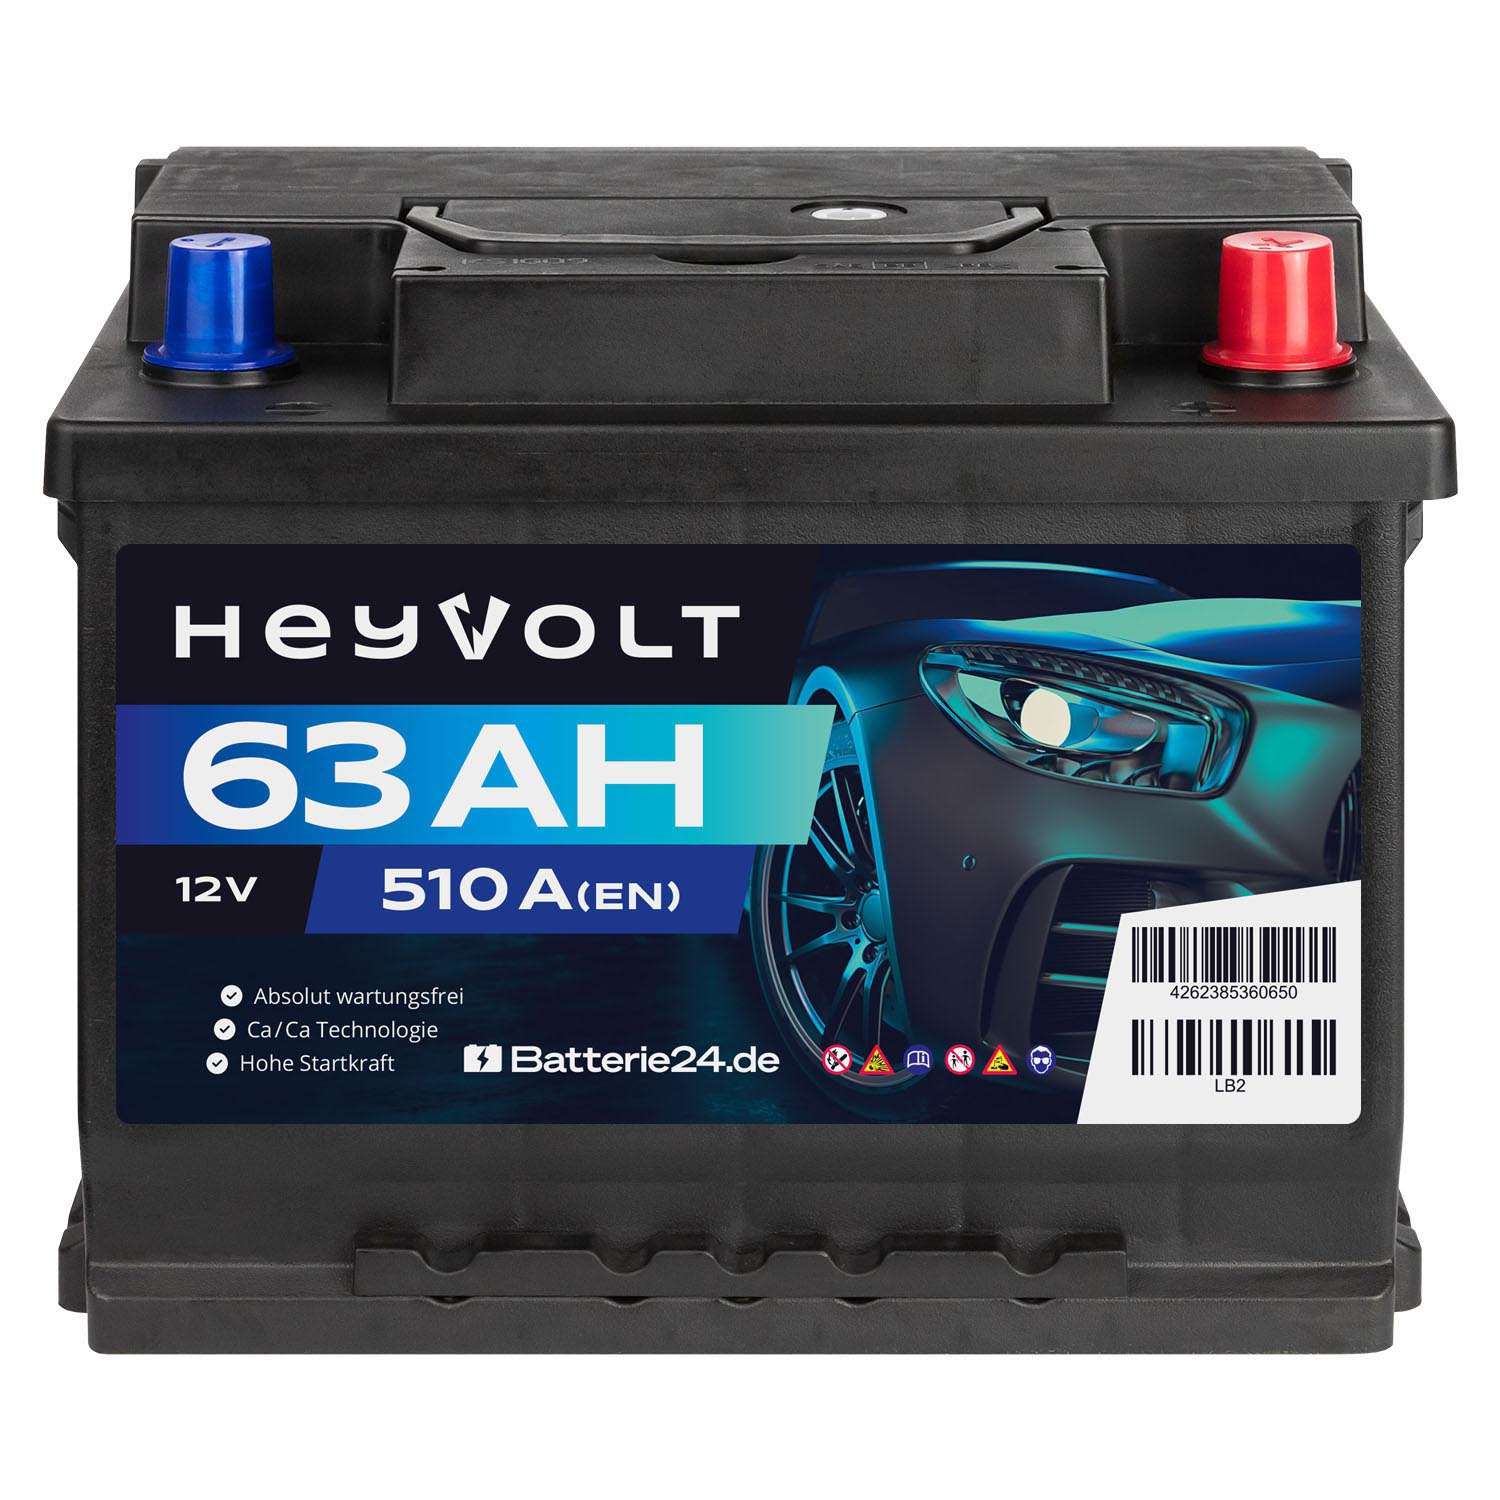 HeyVolt Start Autobatterie 12V 63Ah